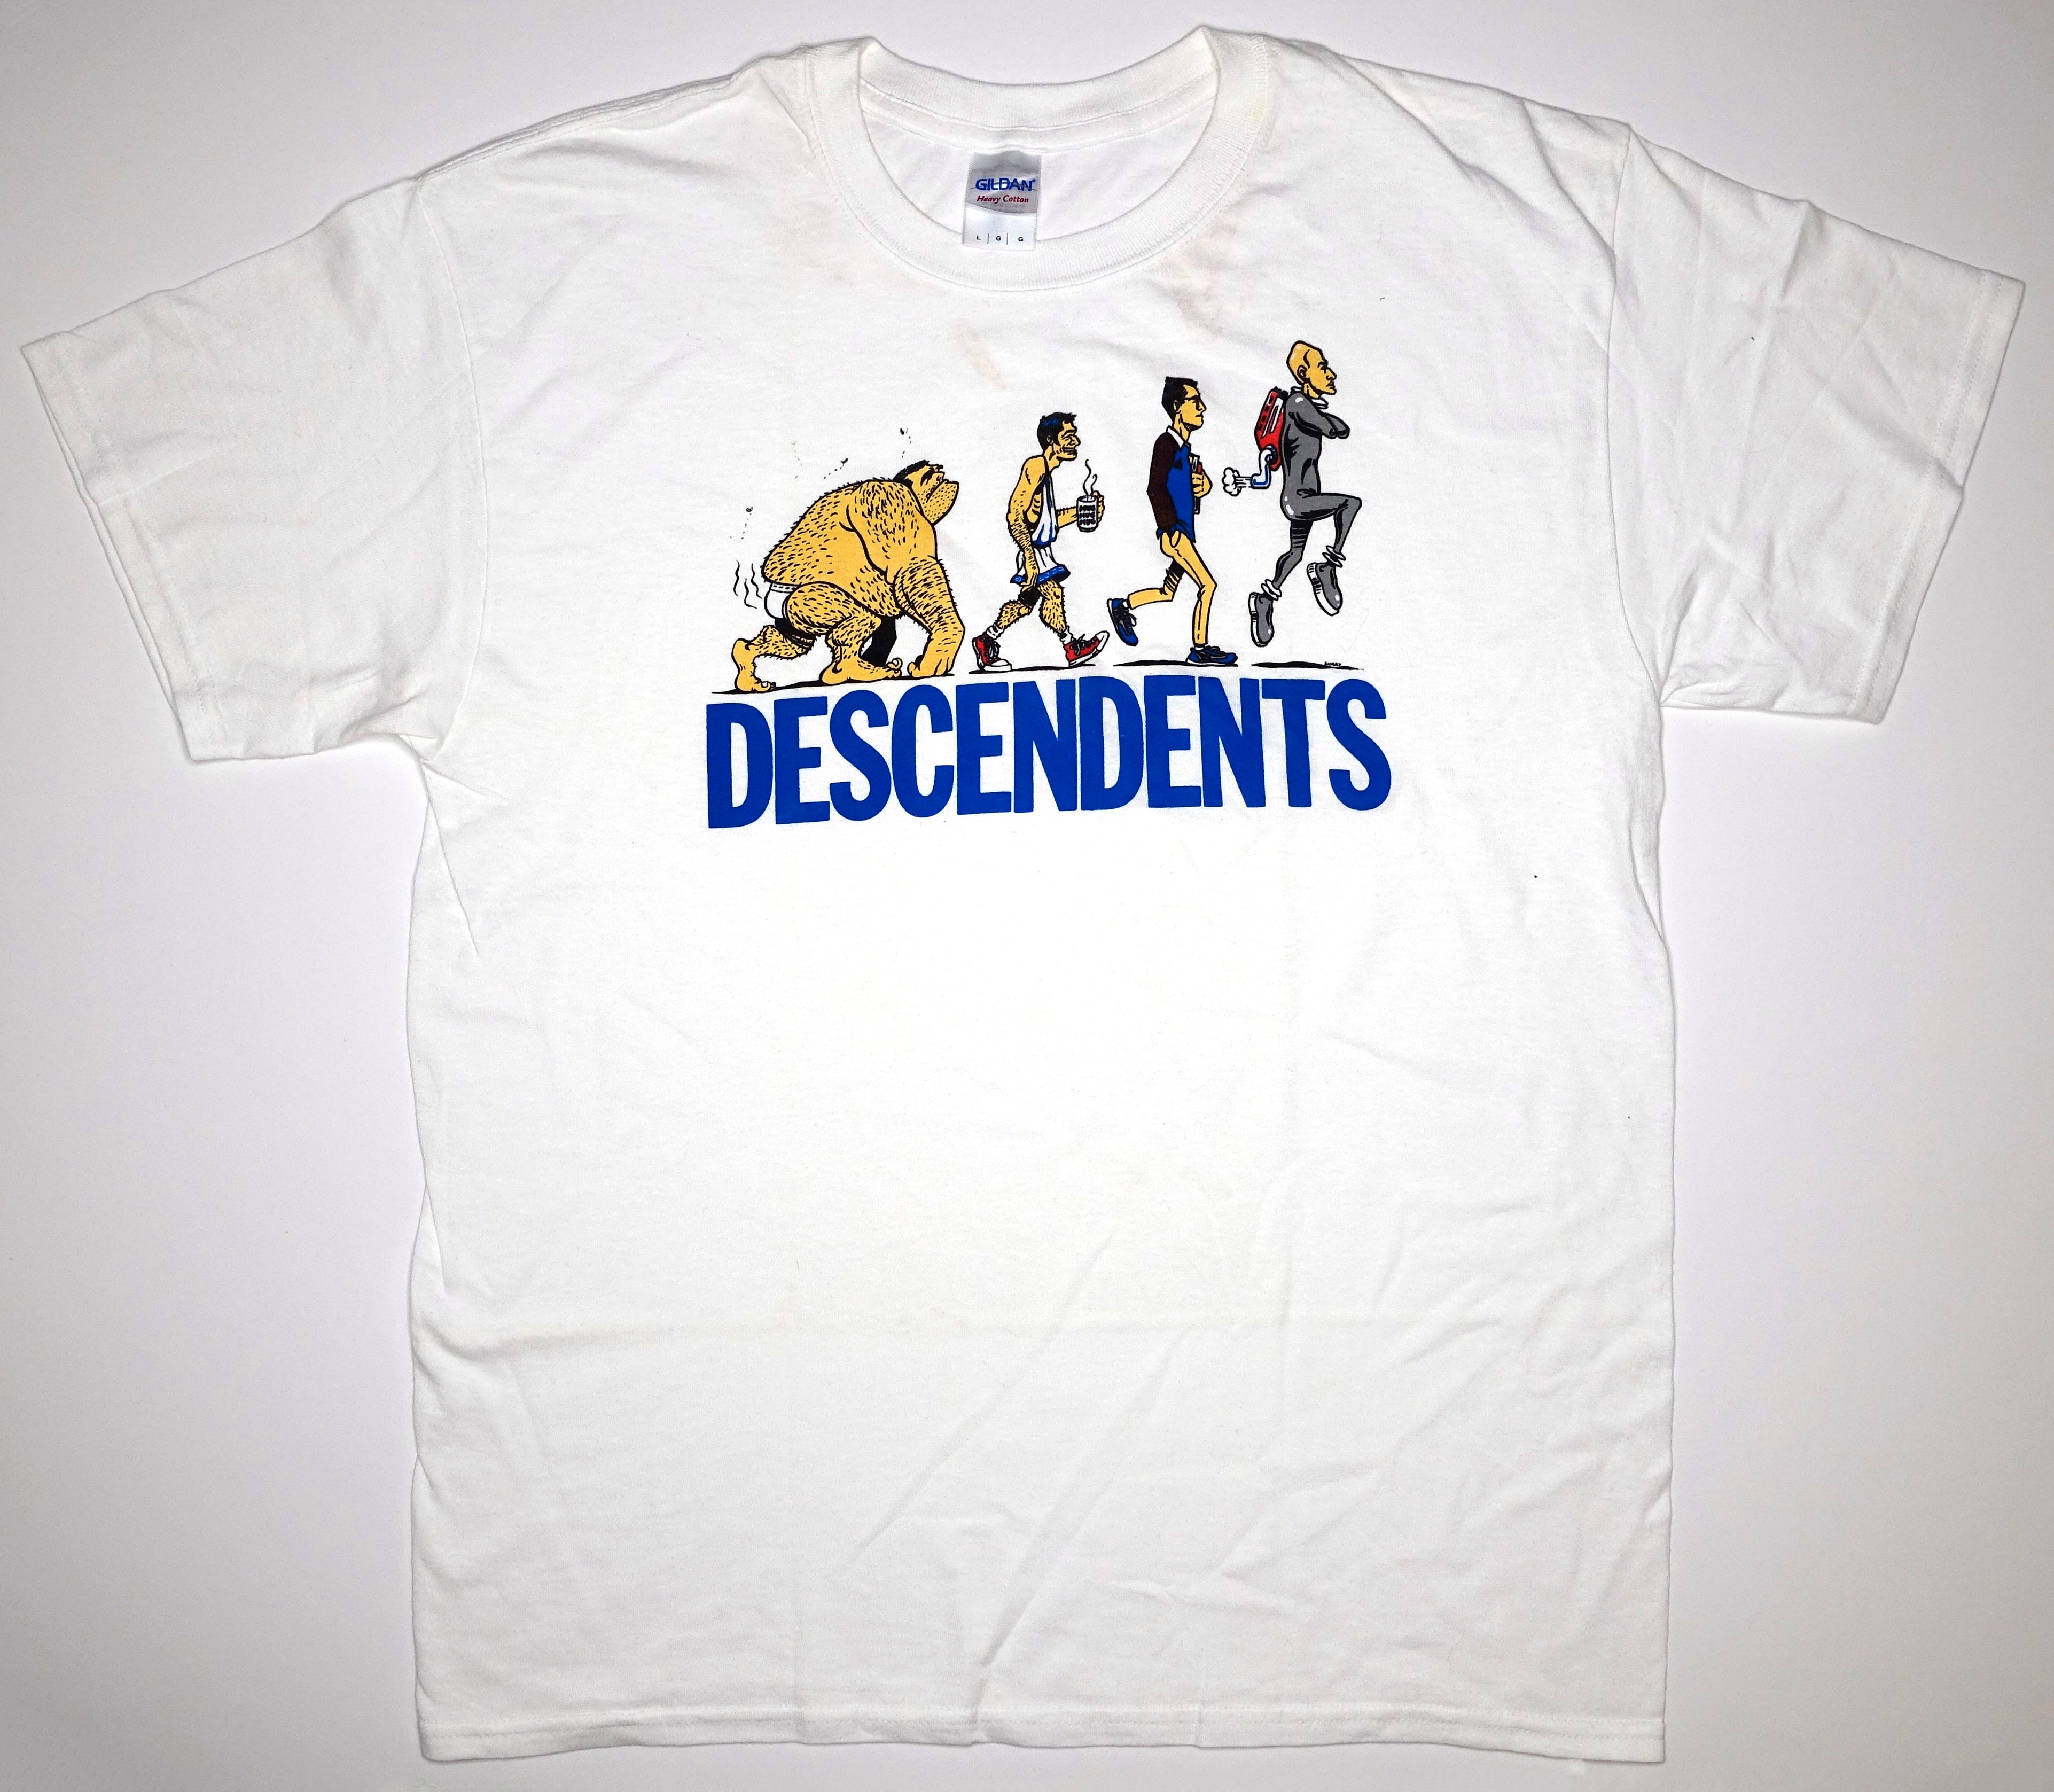 Descendents - Ascent Of Man Shirt Size Large